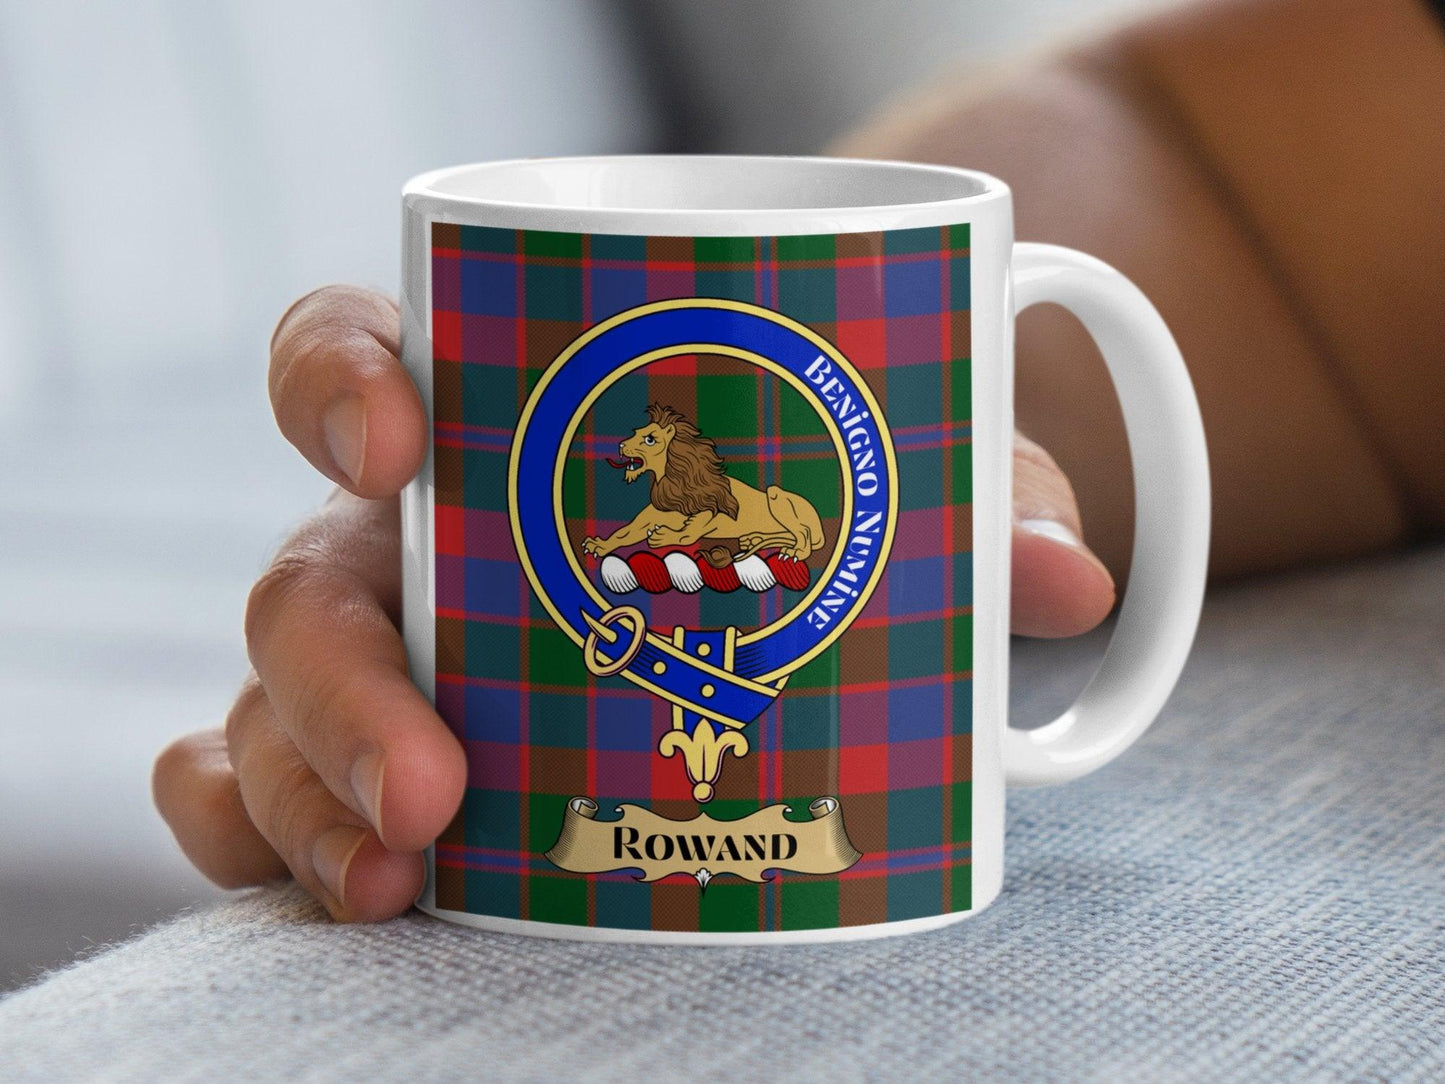 Rowand Scottish Clan Tartan with Crest Mug - Living Stone Gifts